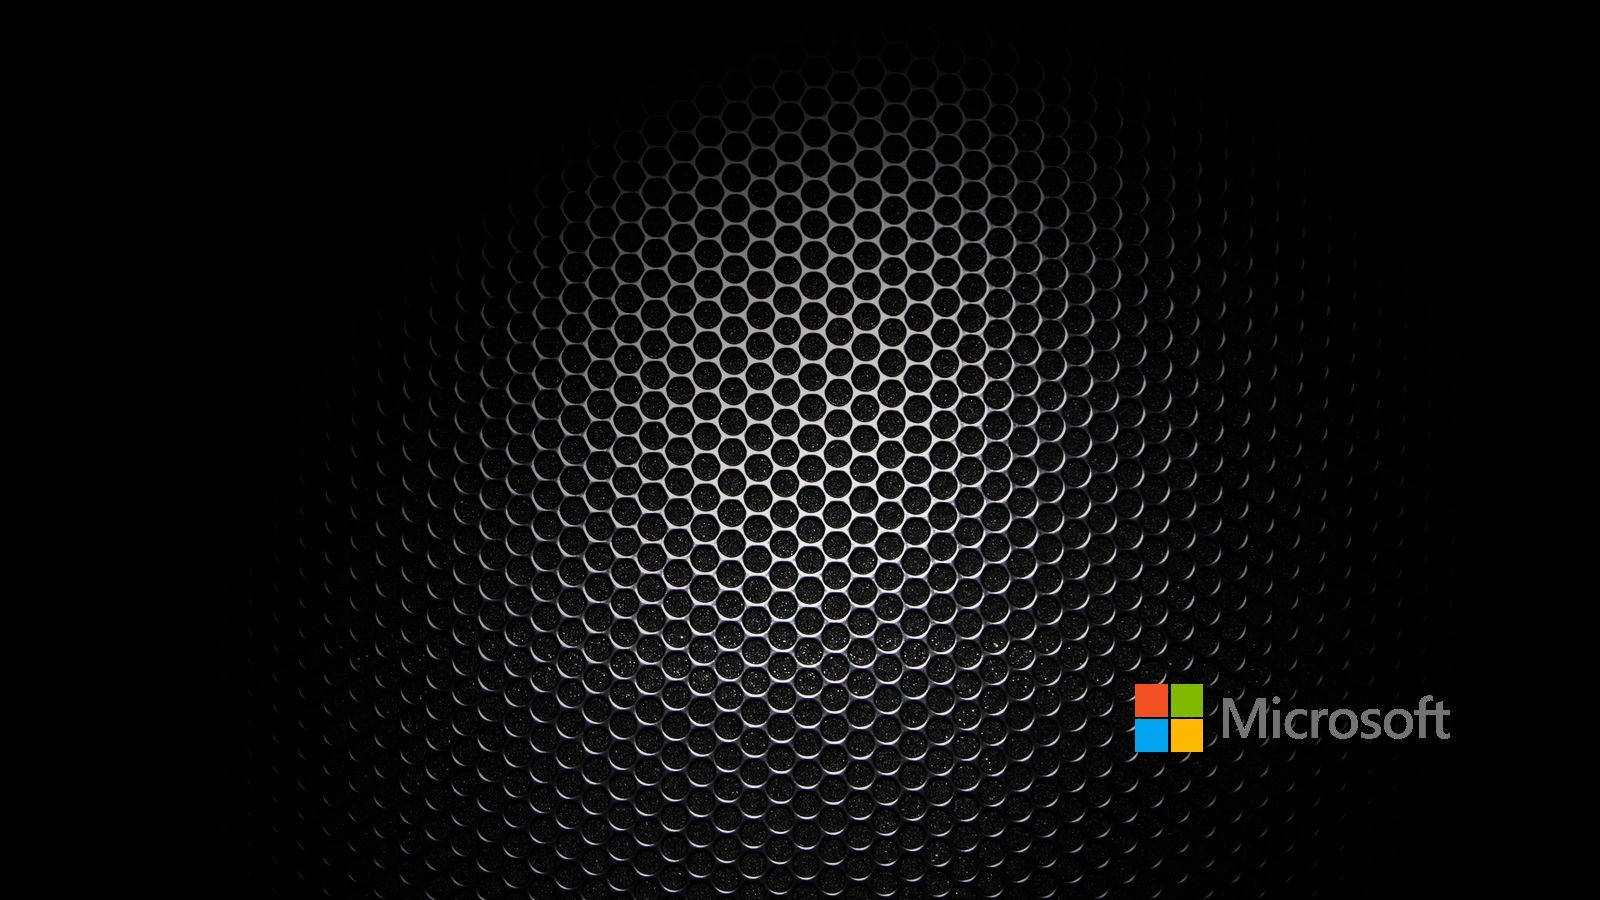 Microsoft Black Honeycomb Metal Mesh Background